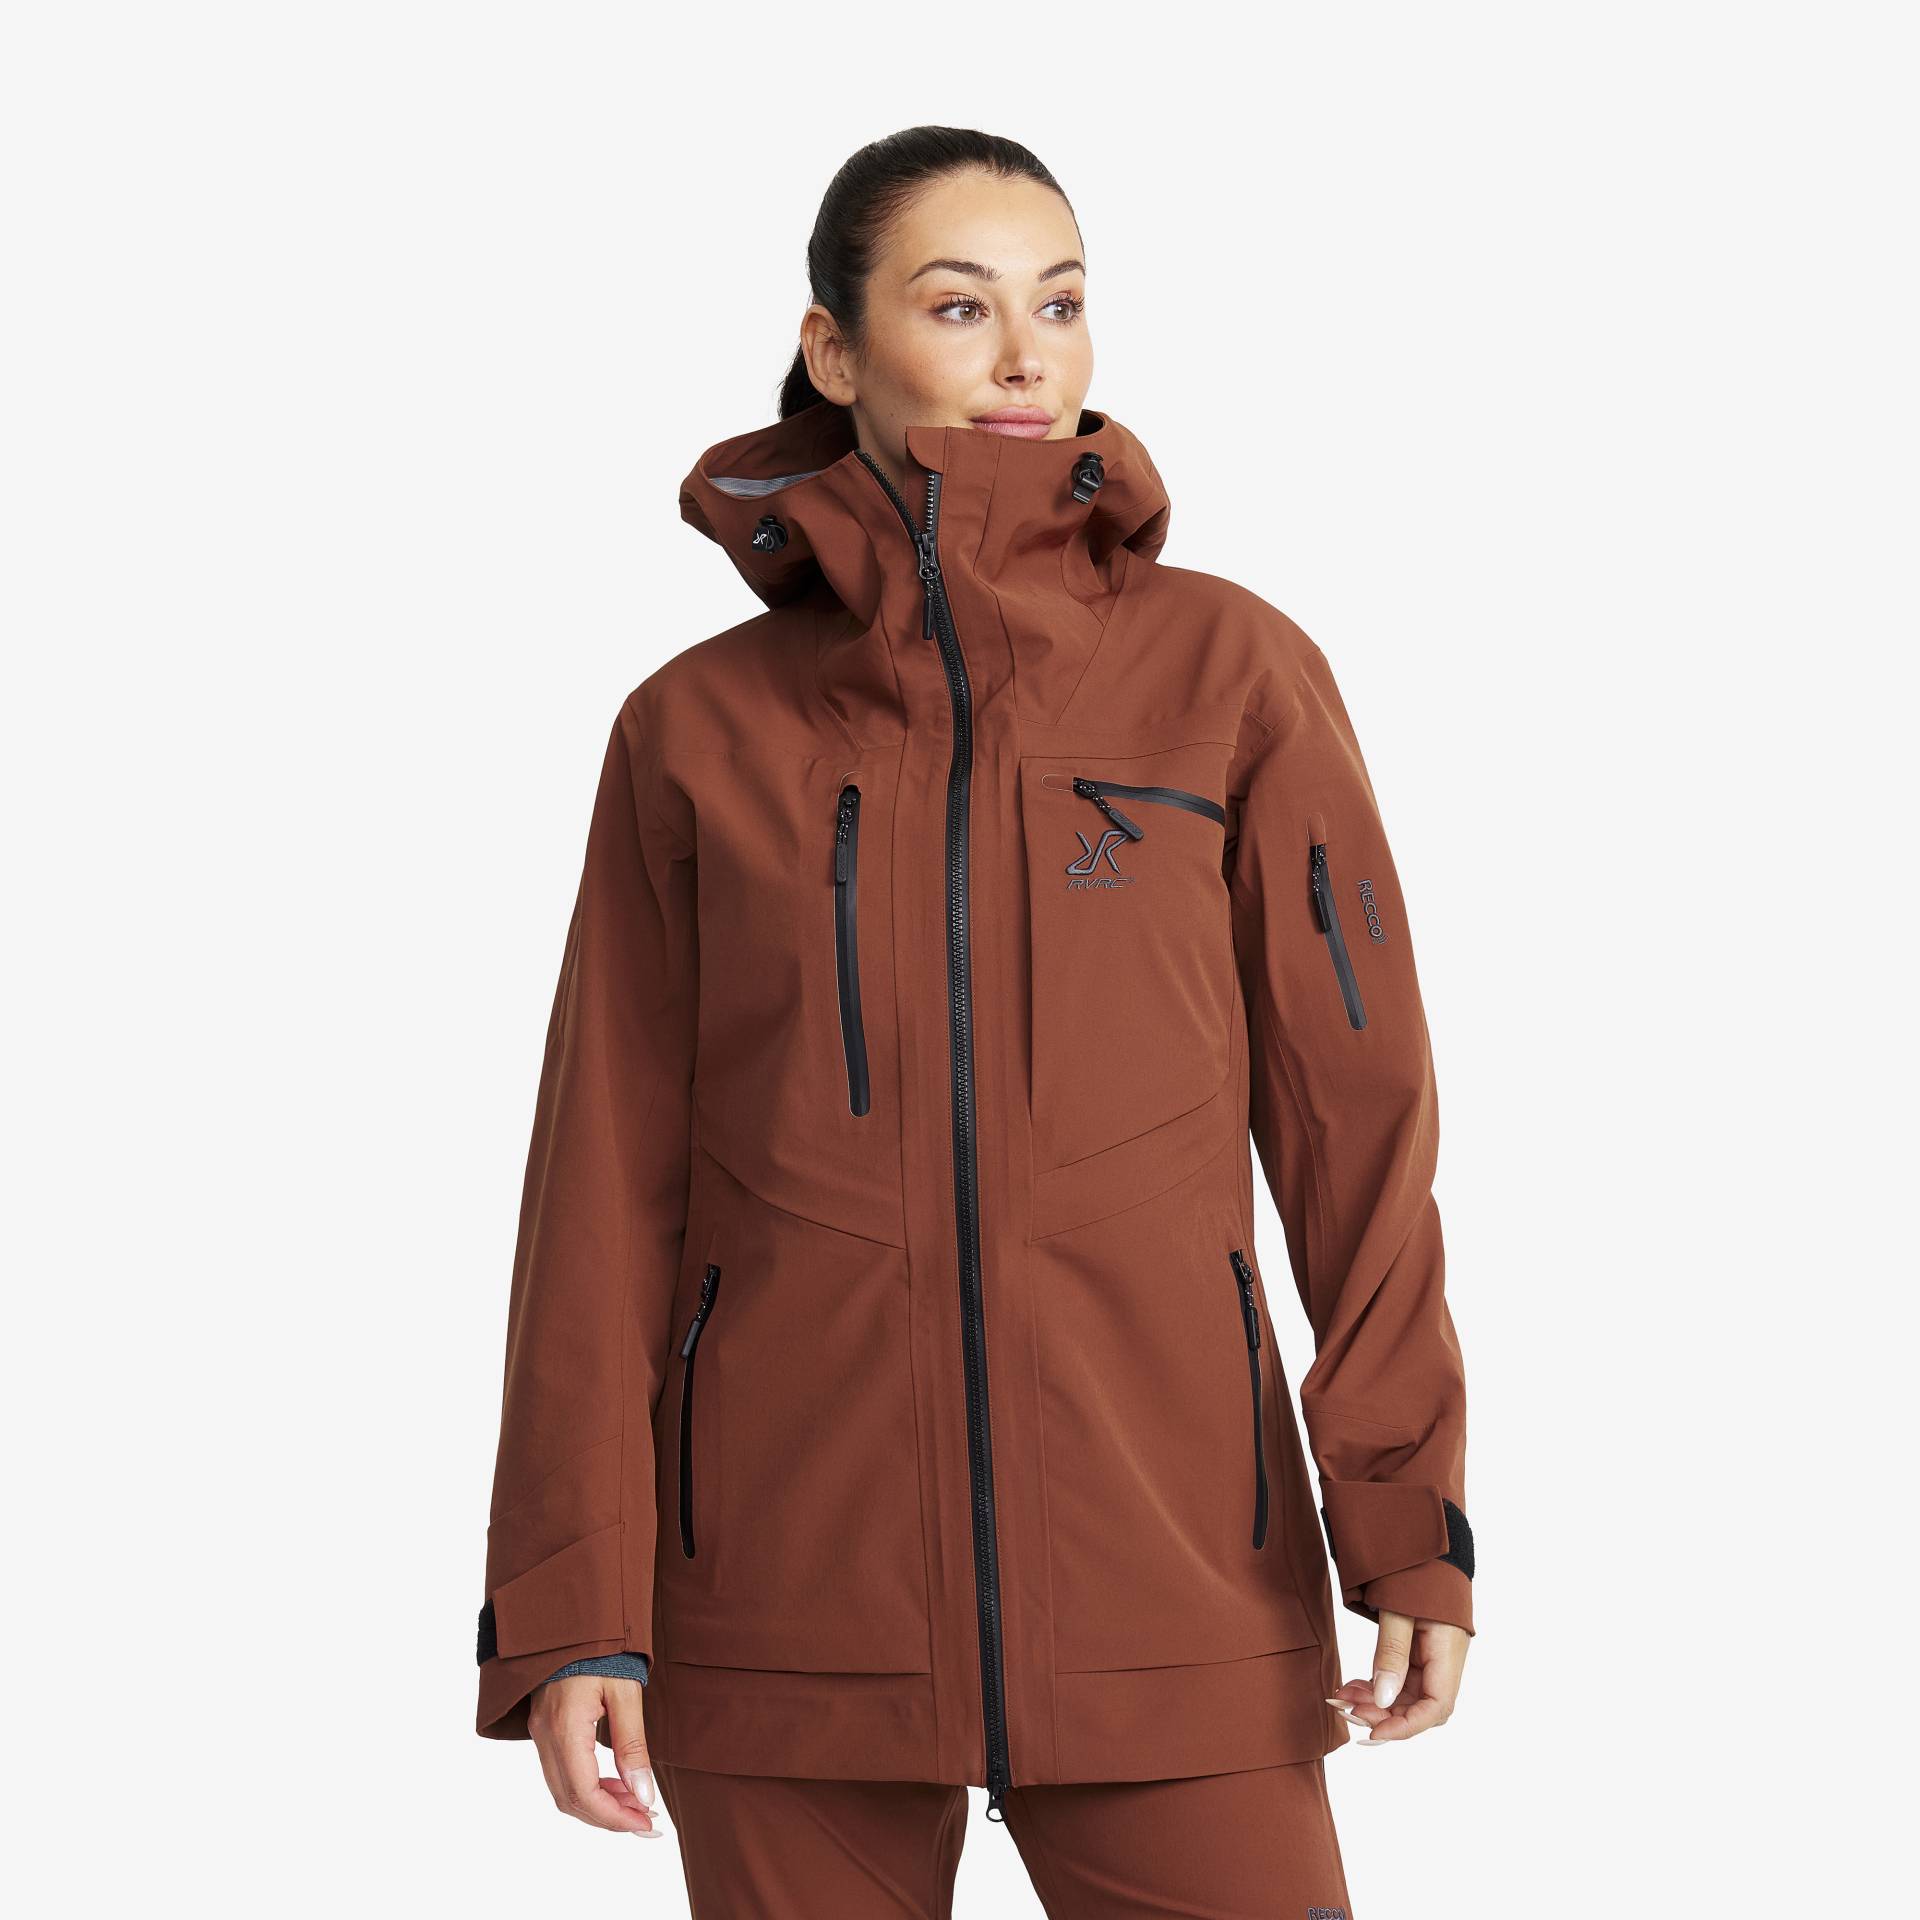 Cyclone Long 3L Jacket Damen Smoked Paprika, Größe:L - Outdoorjacke, Regenjacke & Softshelljacke von RevolutionRace